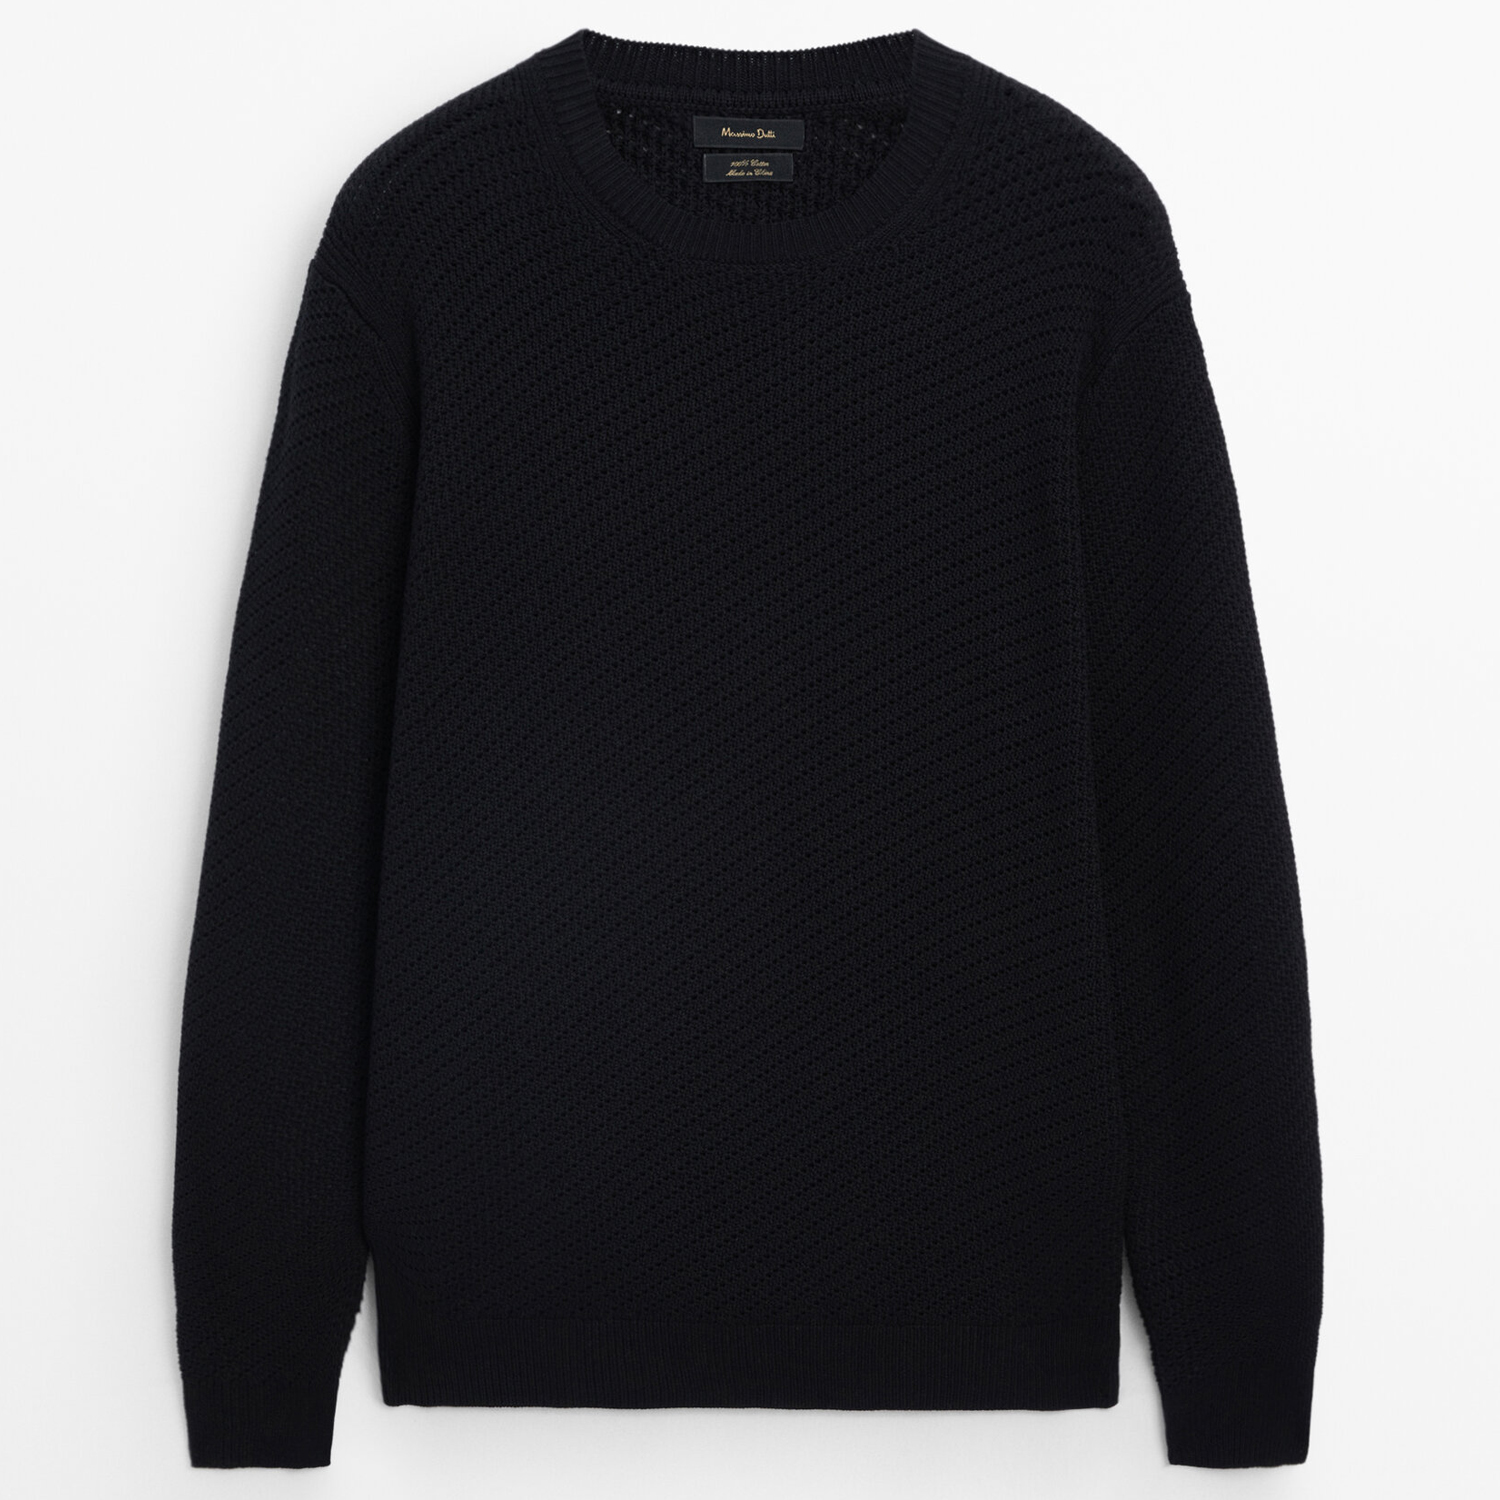 Свитер Massimo Dutti Crew Neck Cotton Mesh Knit, черный свитер massimo dutti 100% cotton crew neck чёрный